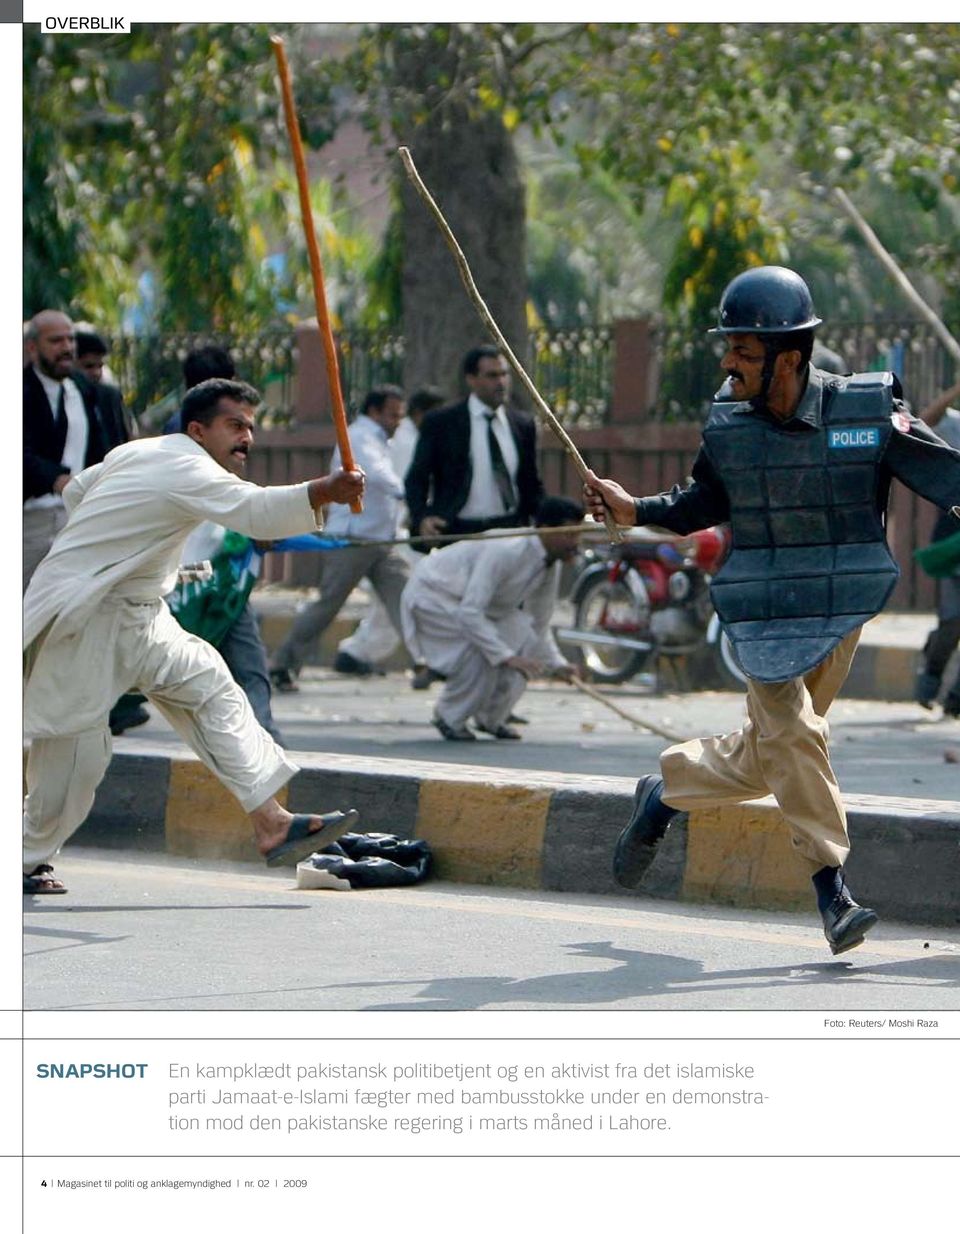 fægter med bambusstokke under en demonstration mod den pakistanske